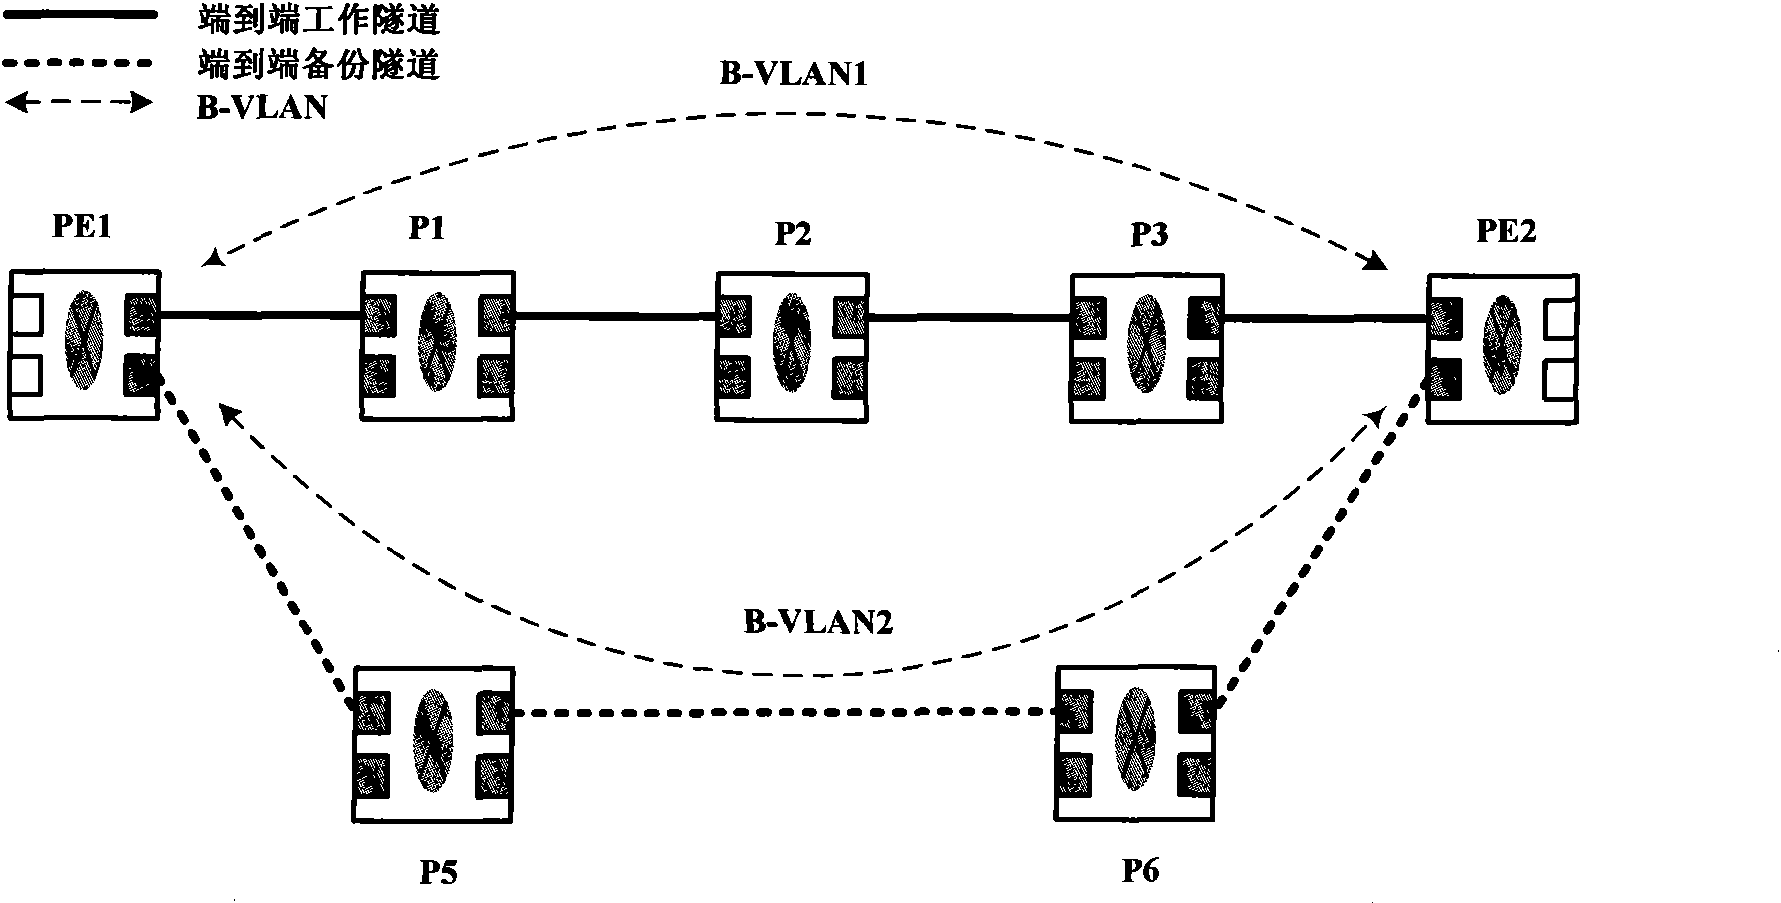 Ethernet ring network-based PBB-TE protection method